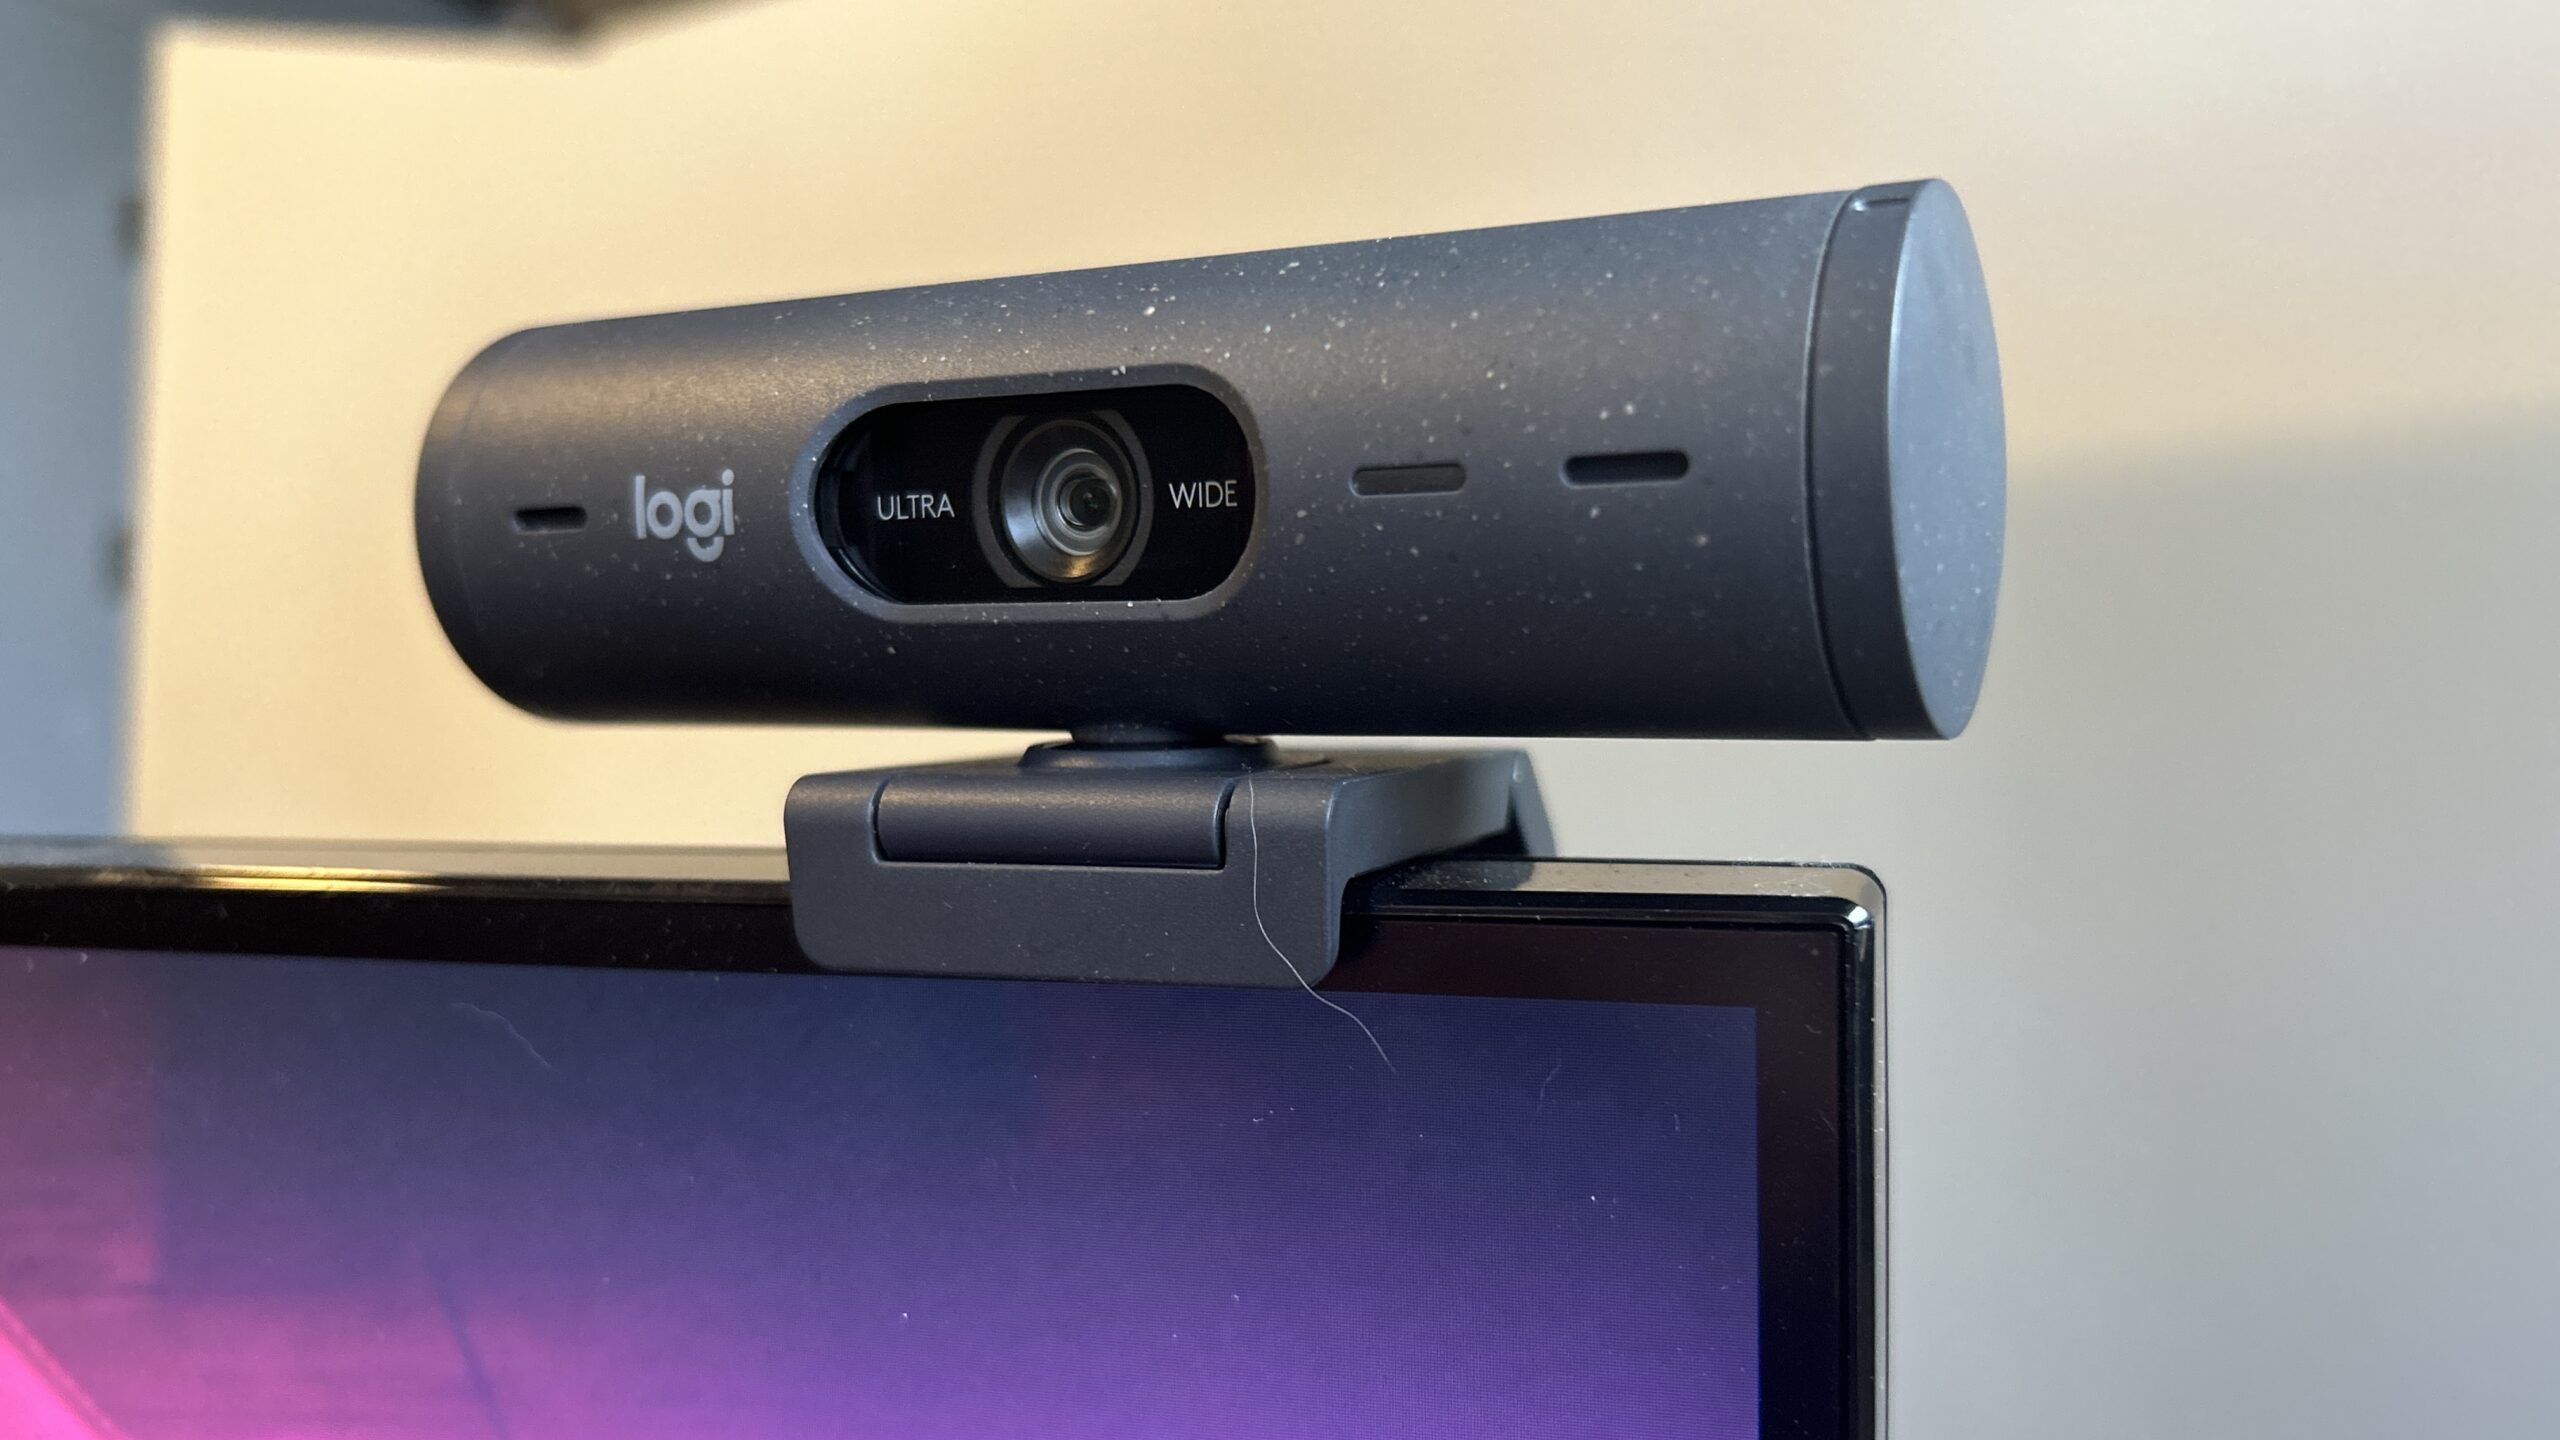 Logitech C920 HD Webcam Review - LIVE CAMERA TEST! 